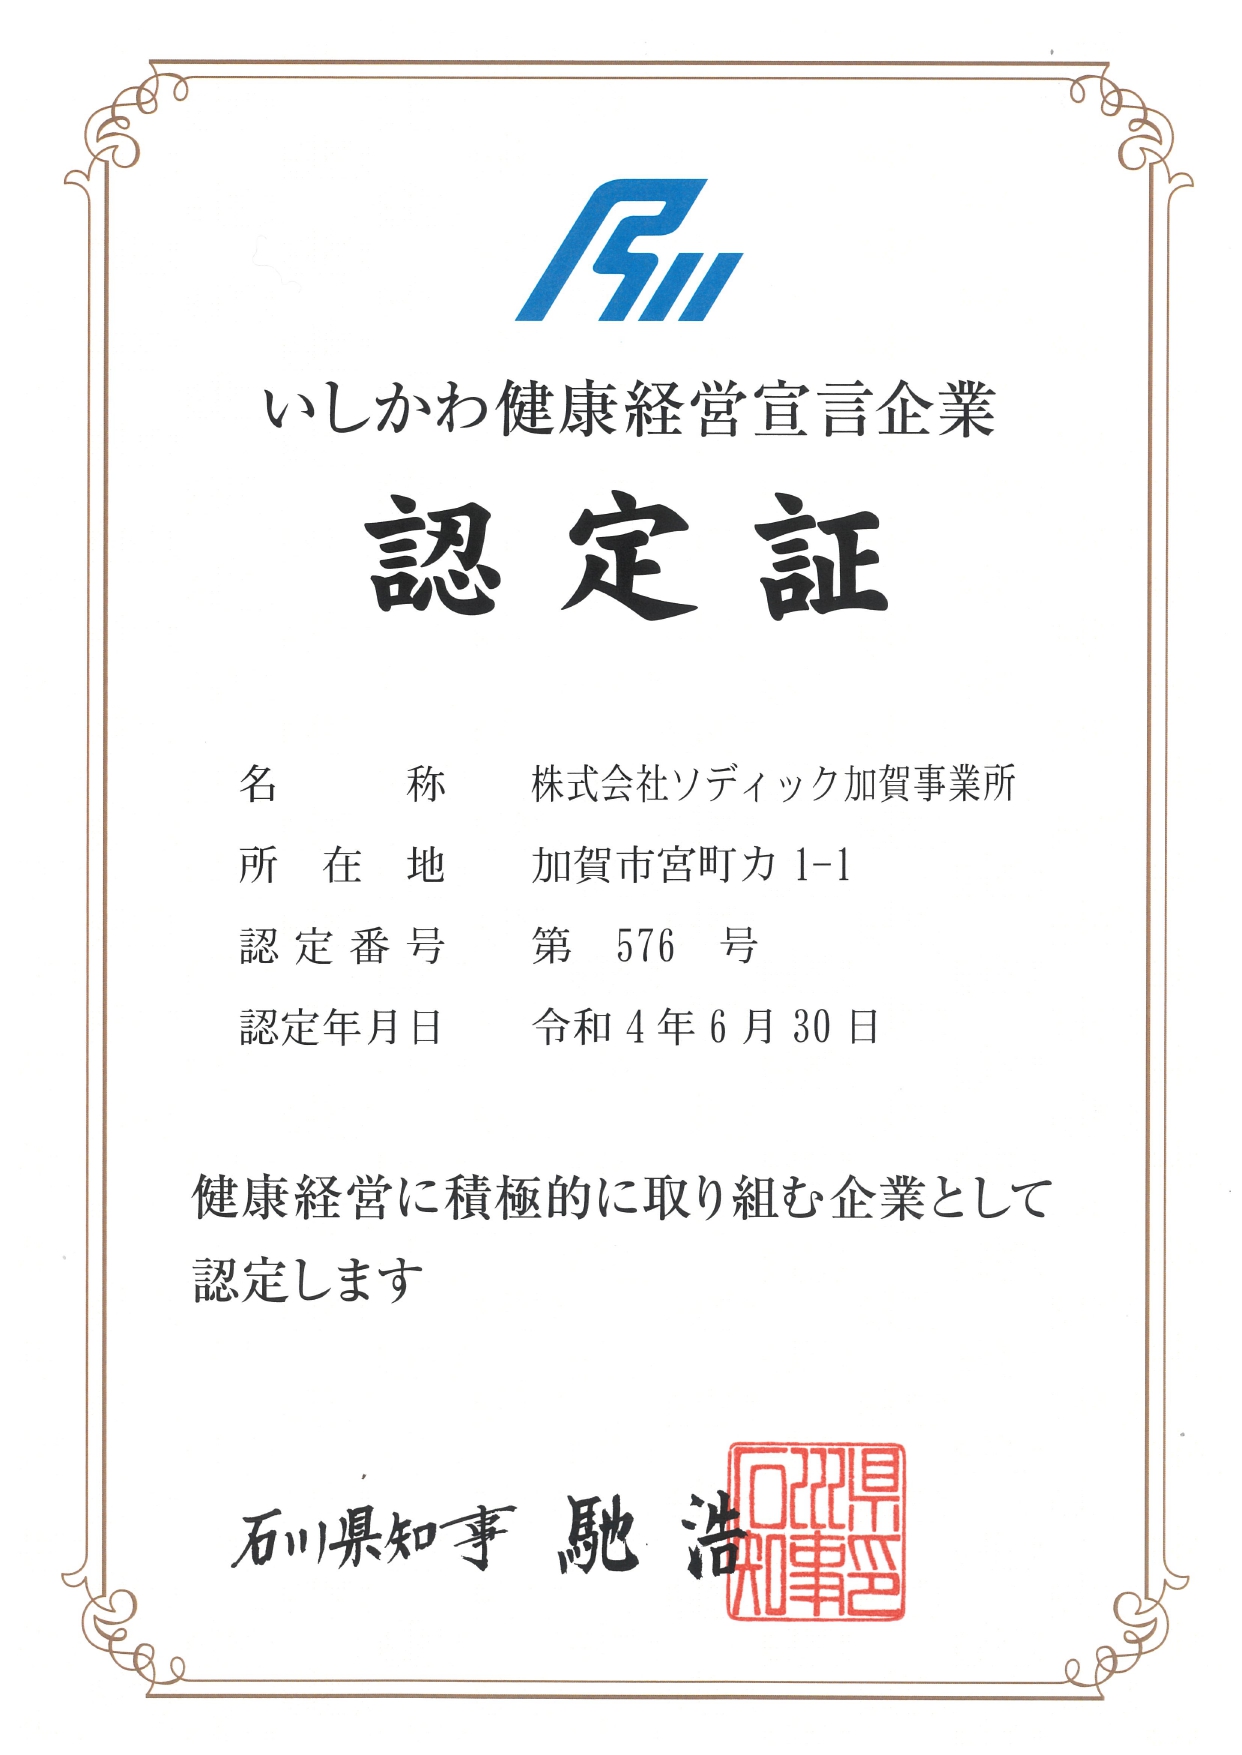 Ishikawa Health and productivity management Declaration Company